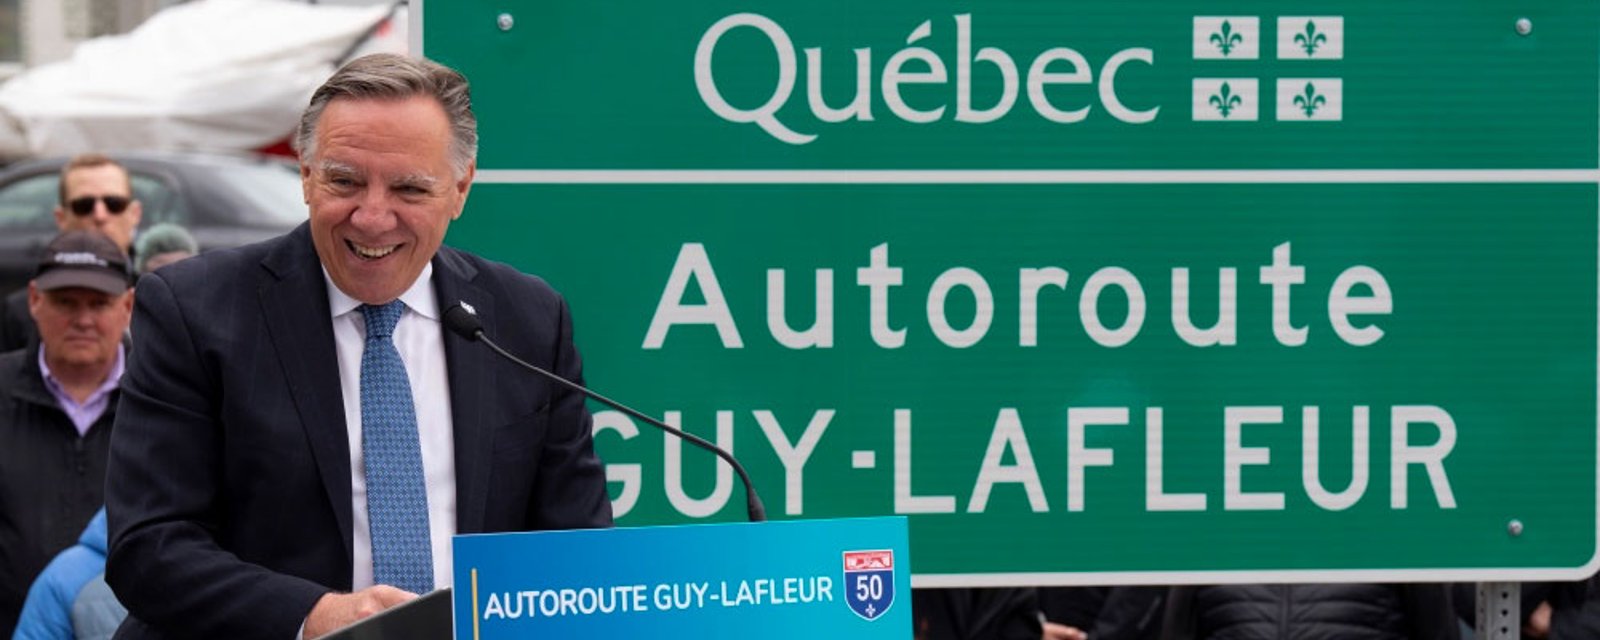 Major highway in Quebec renamed in honor of Guy Lafleur